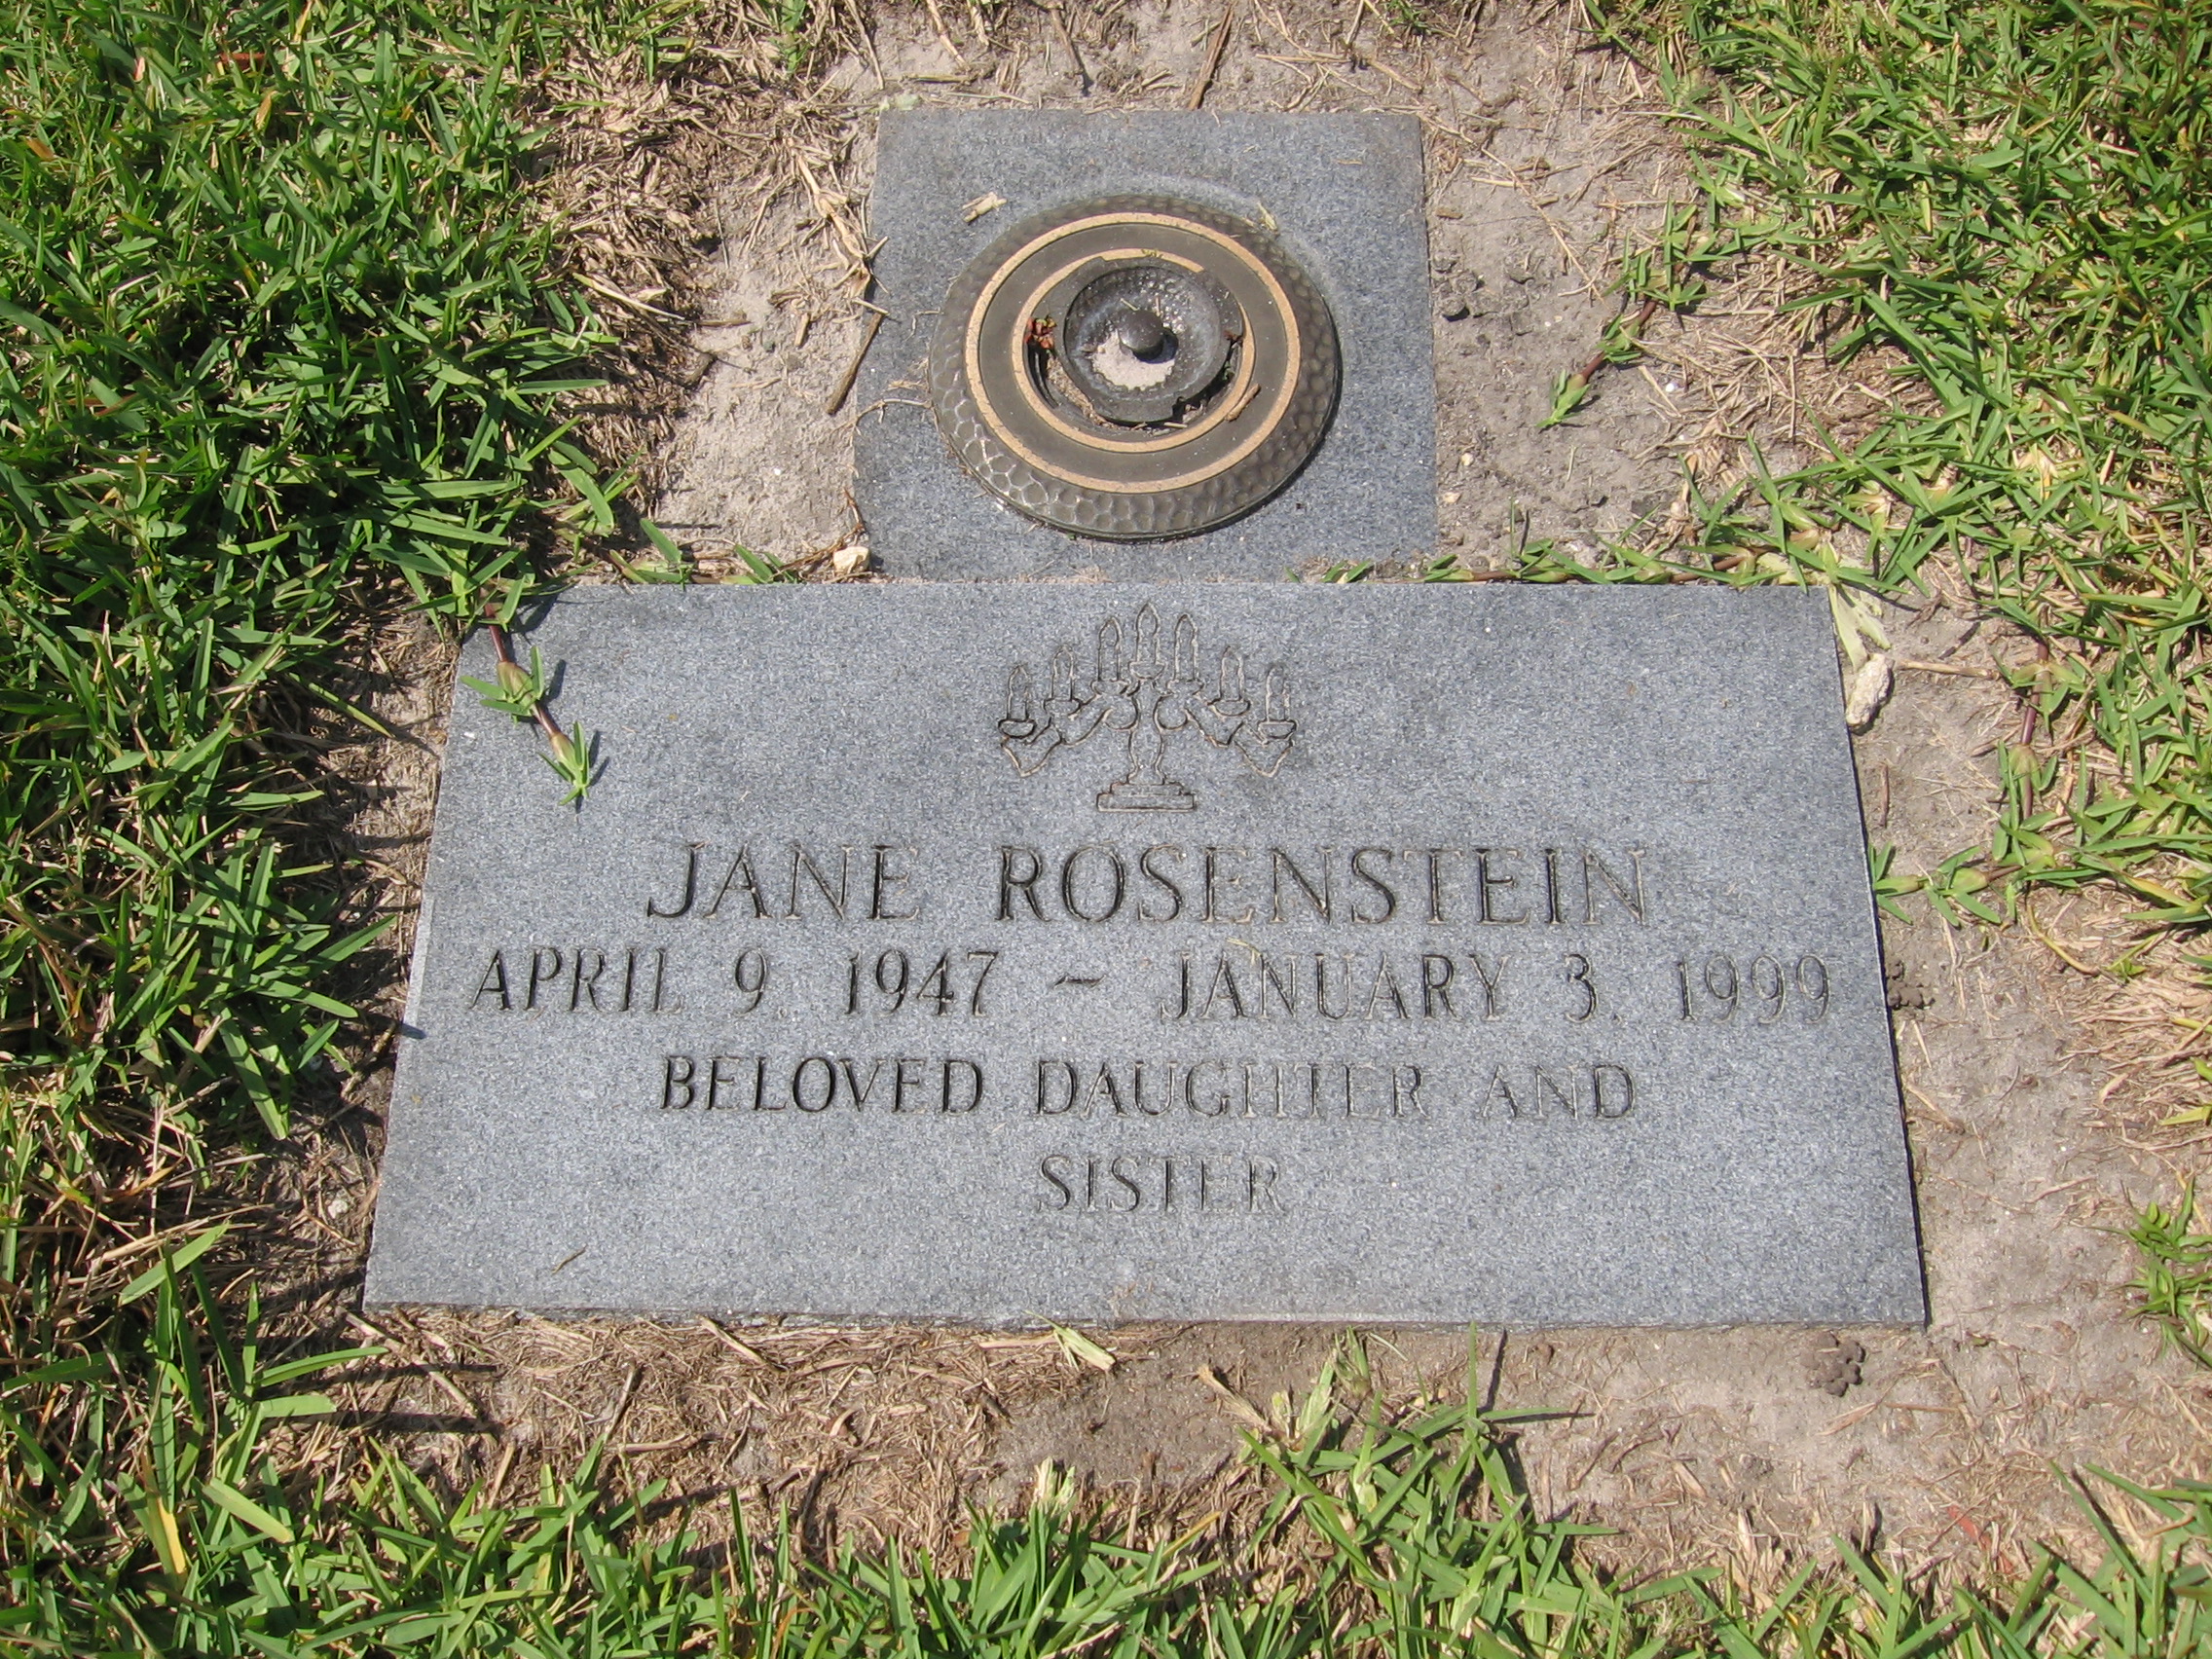 Jane Rosenstein